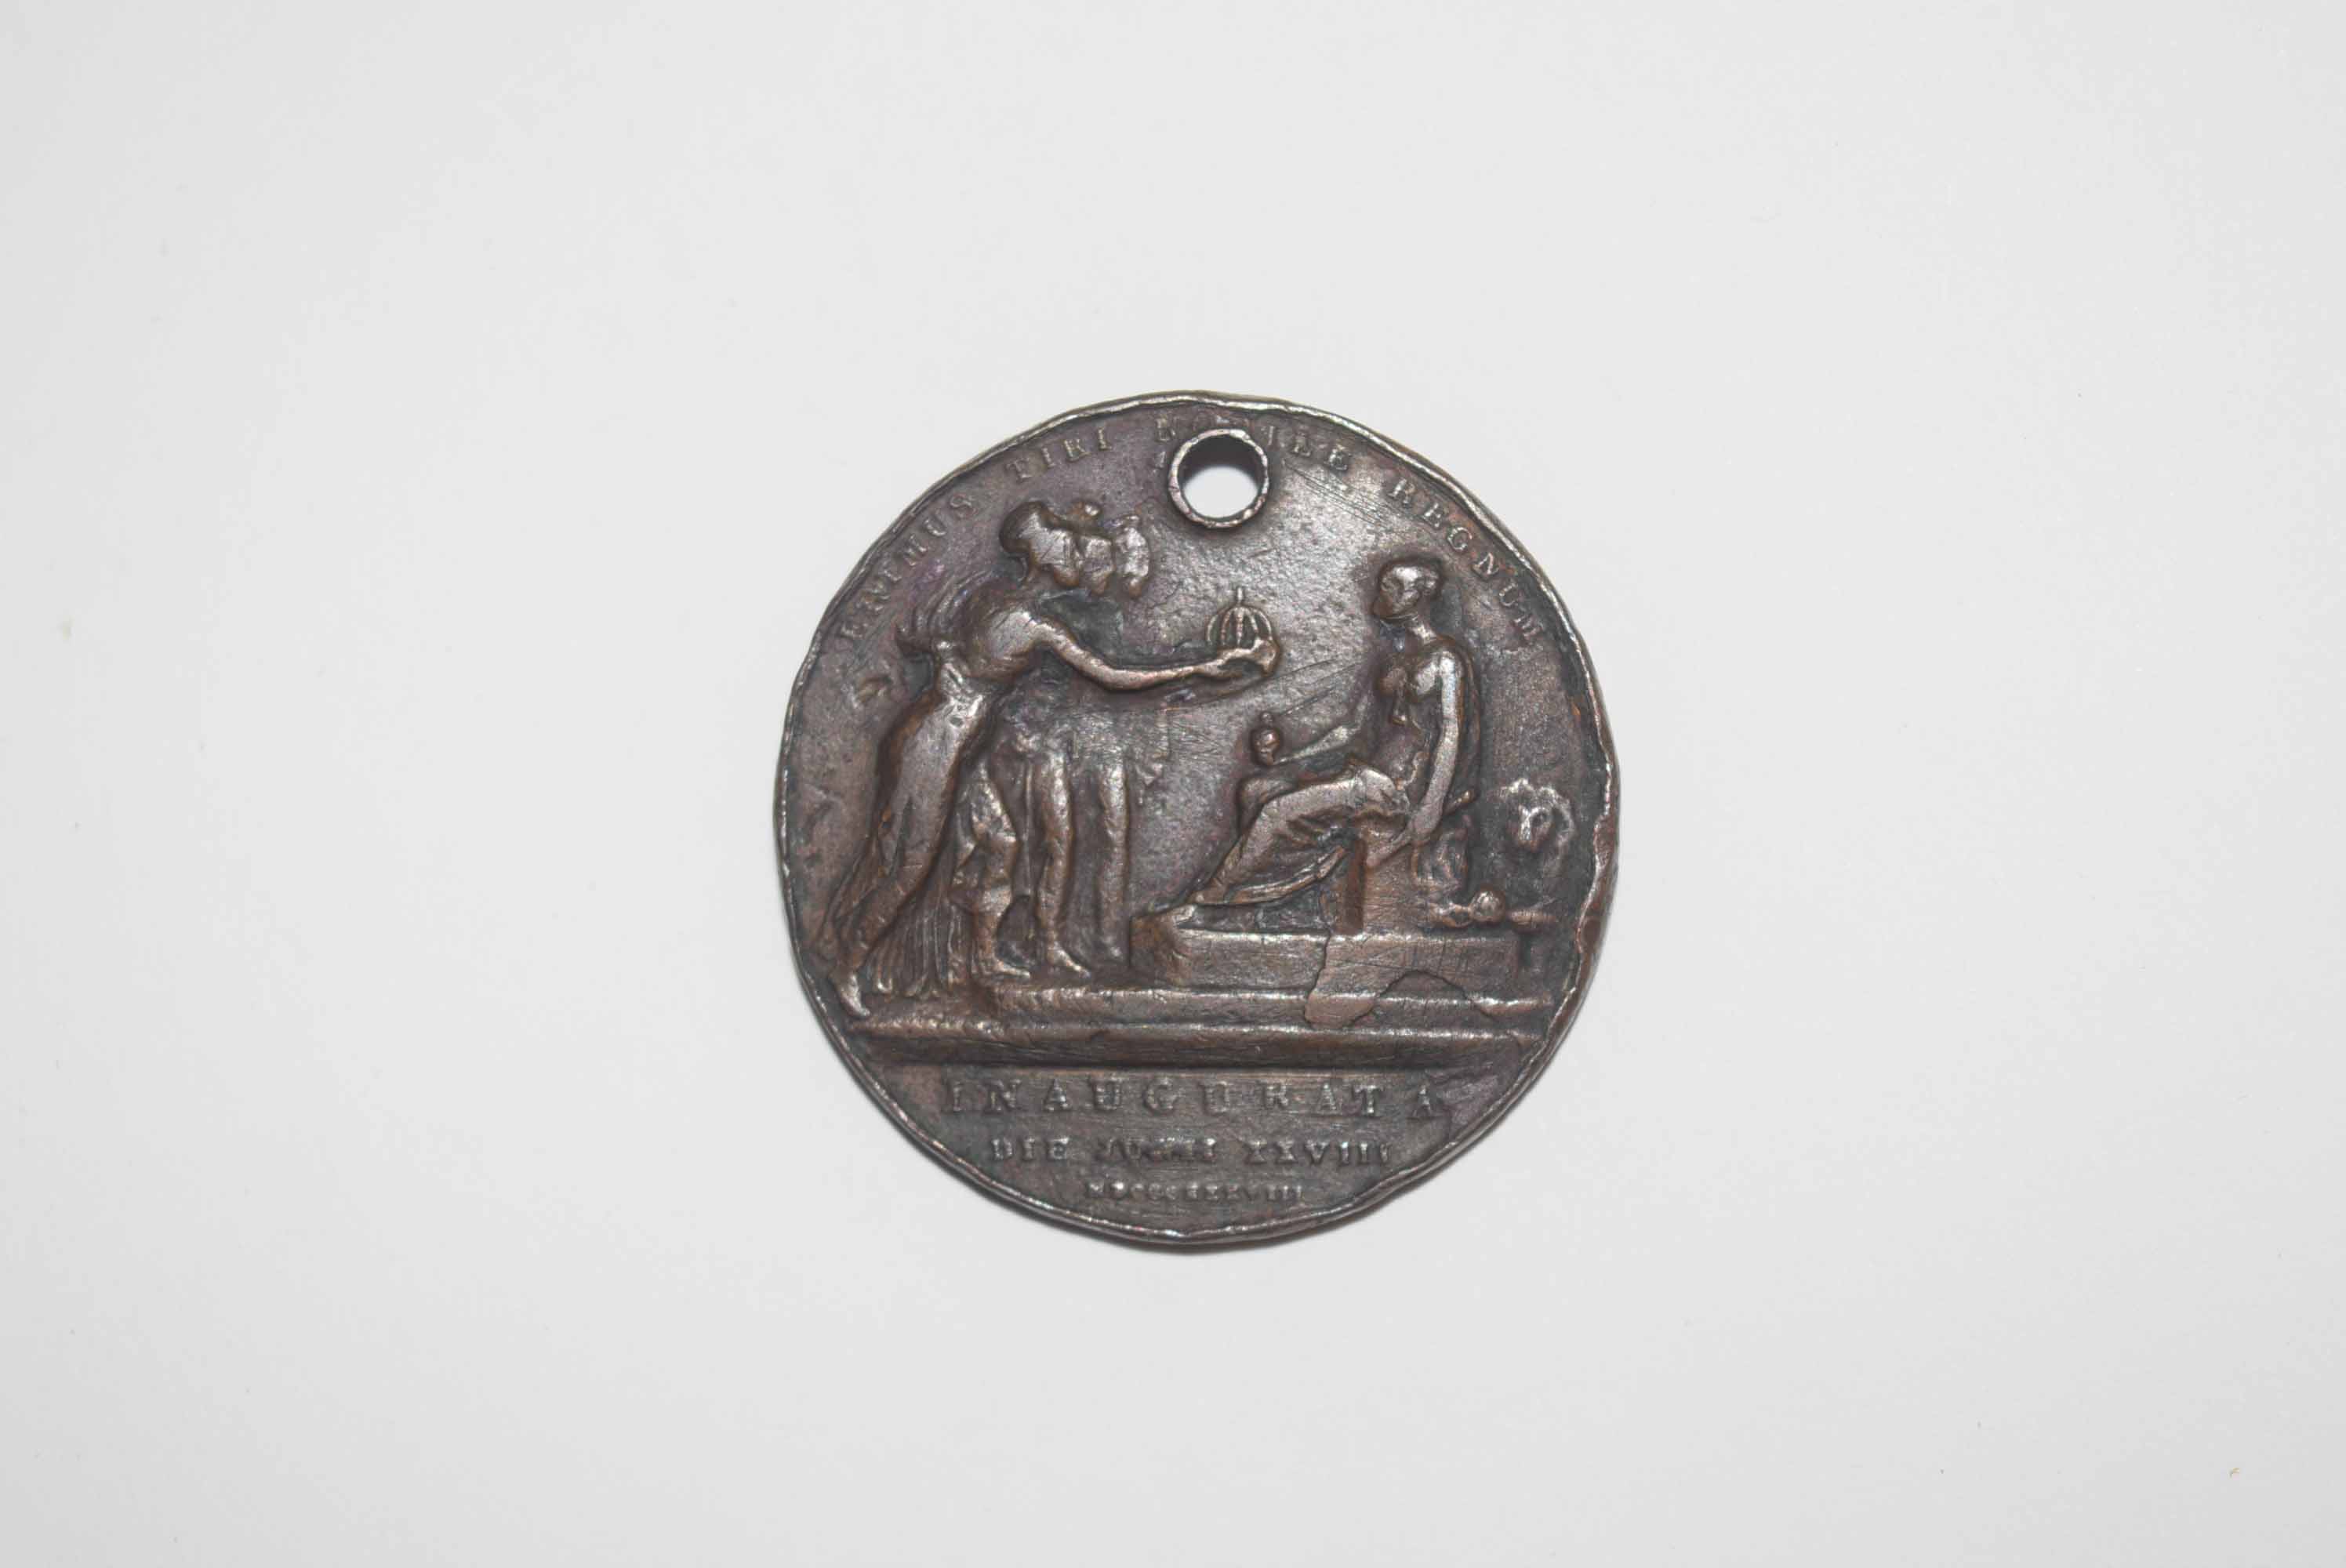 Victorian Coronation medal in bronze designed by Benedetto Pistrucci, head of Queen Victoria - Image 2 of 2